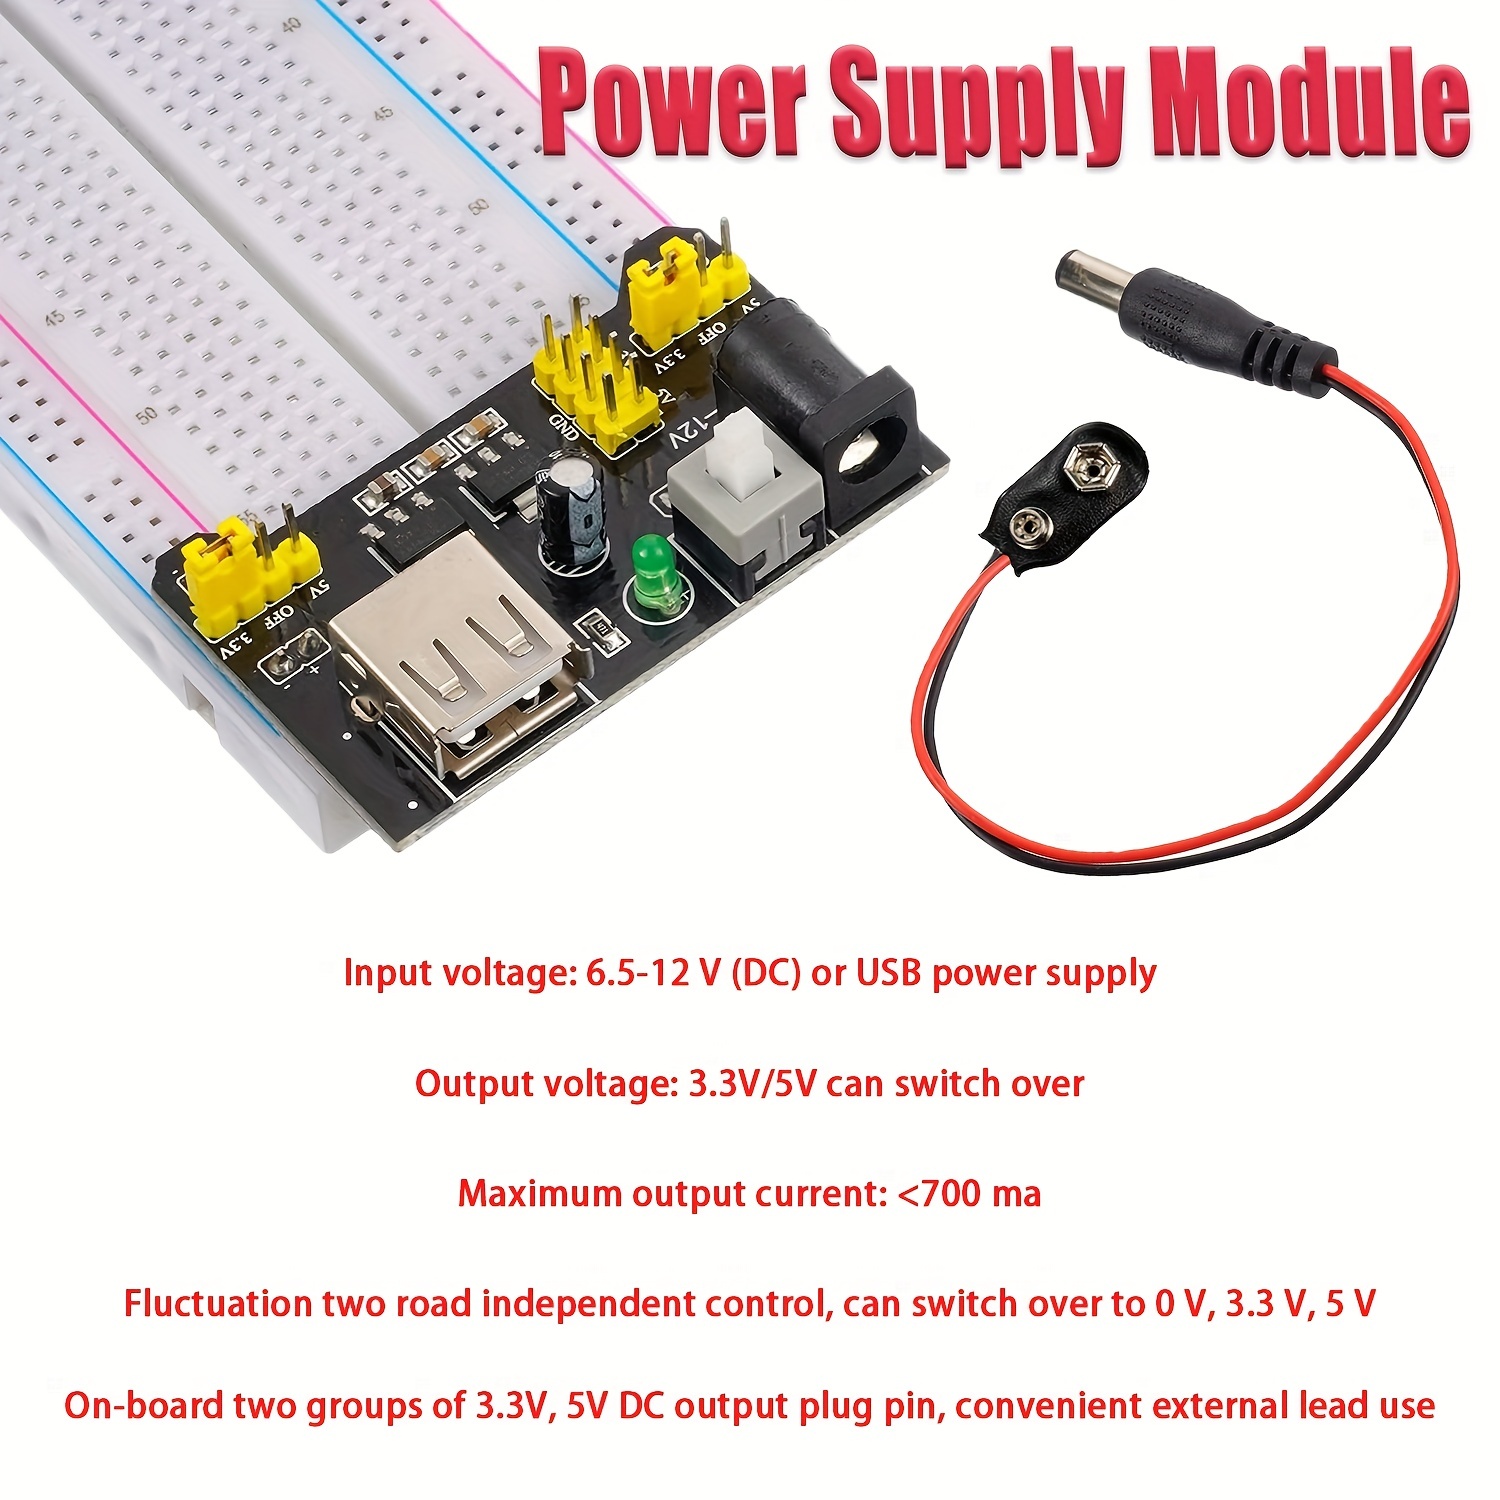 1 Set Breadboard Kit With Power Supply Module,Jumper Wires ,Battery  Clip,830&400 Tie-Points Breadboard